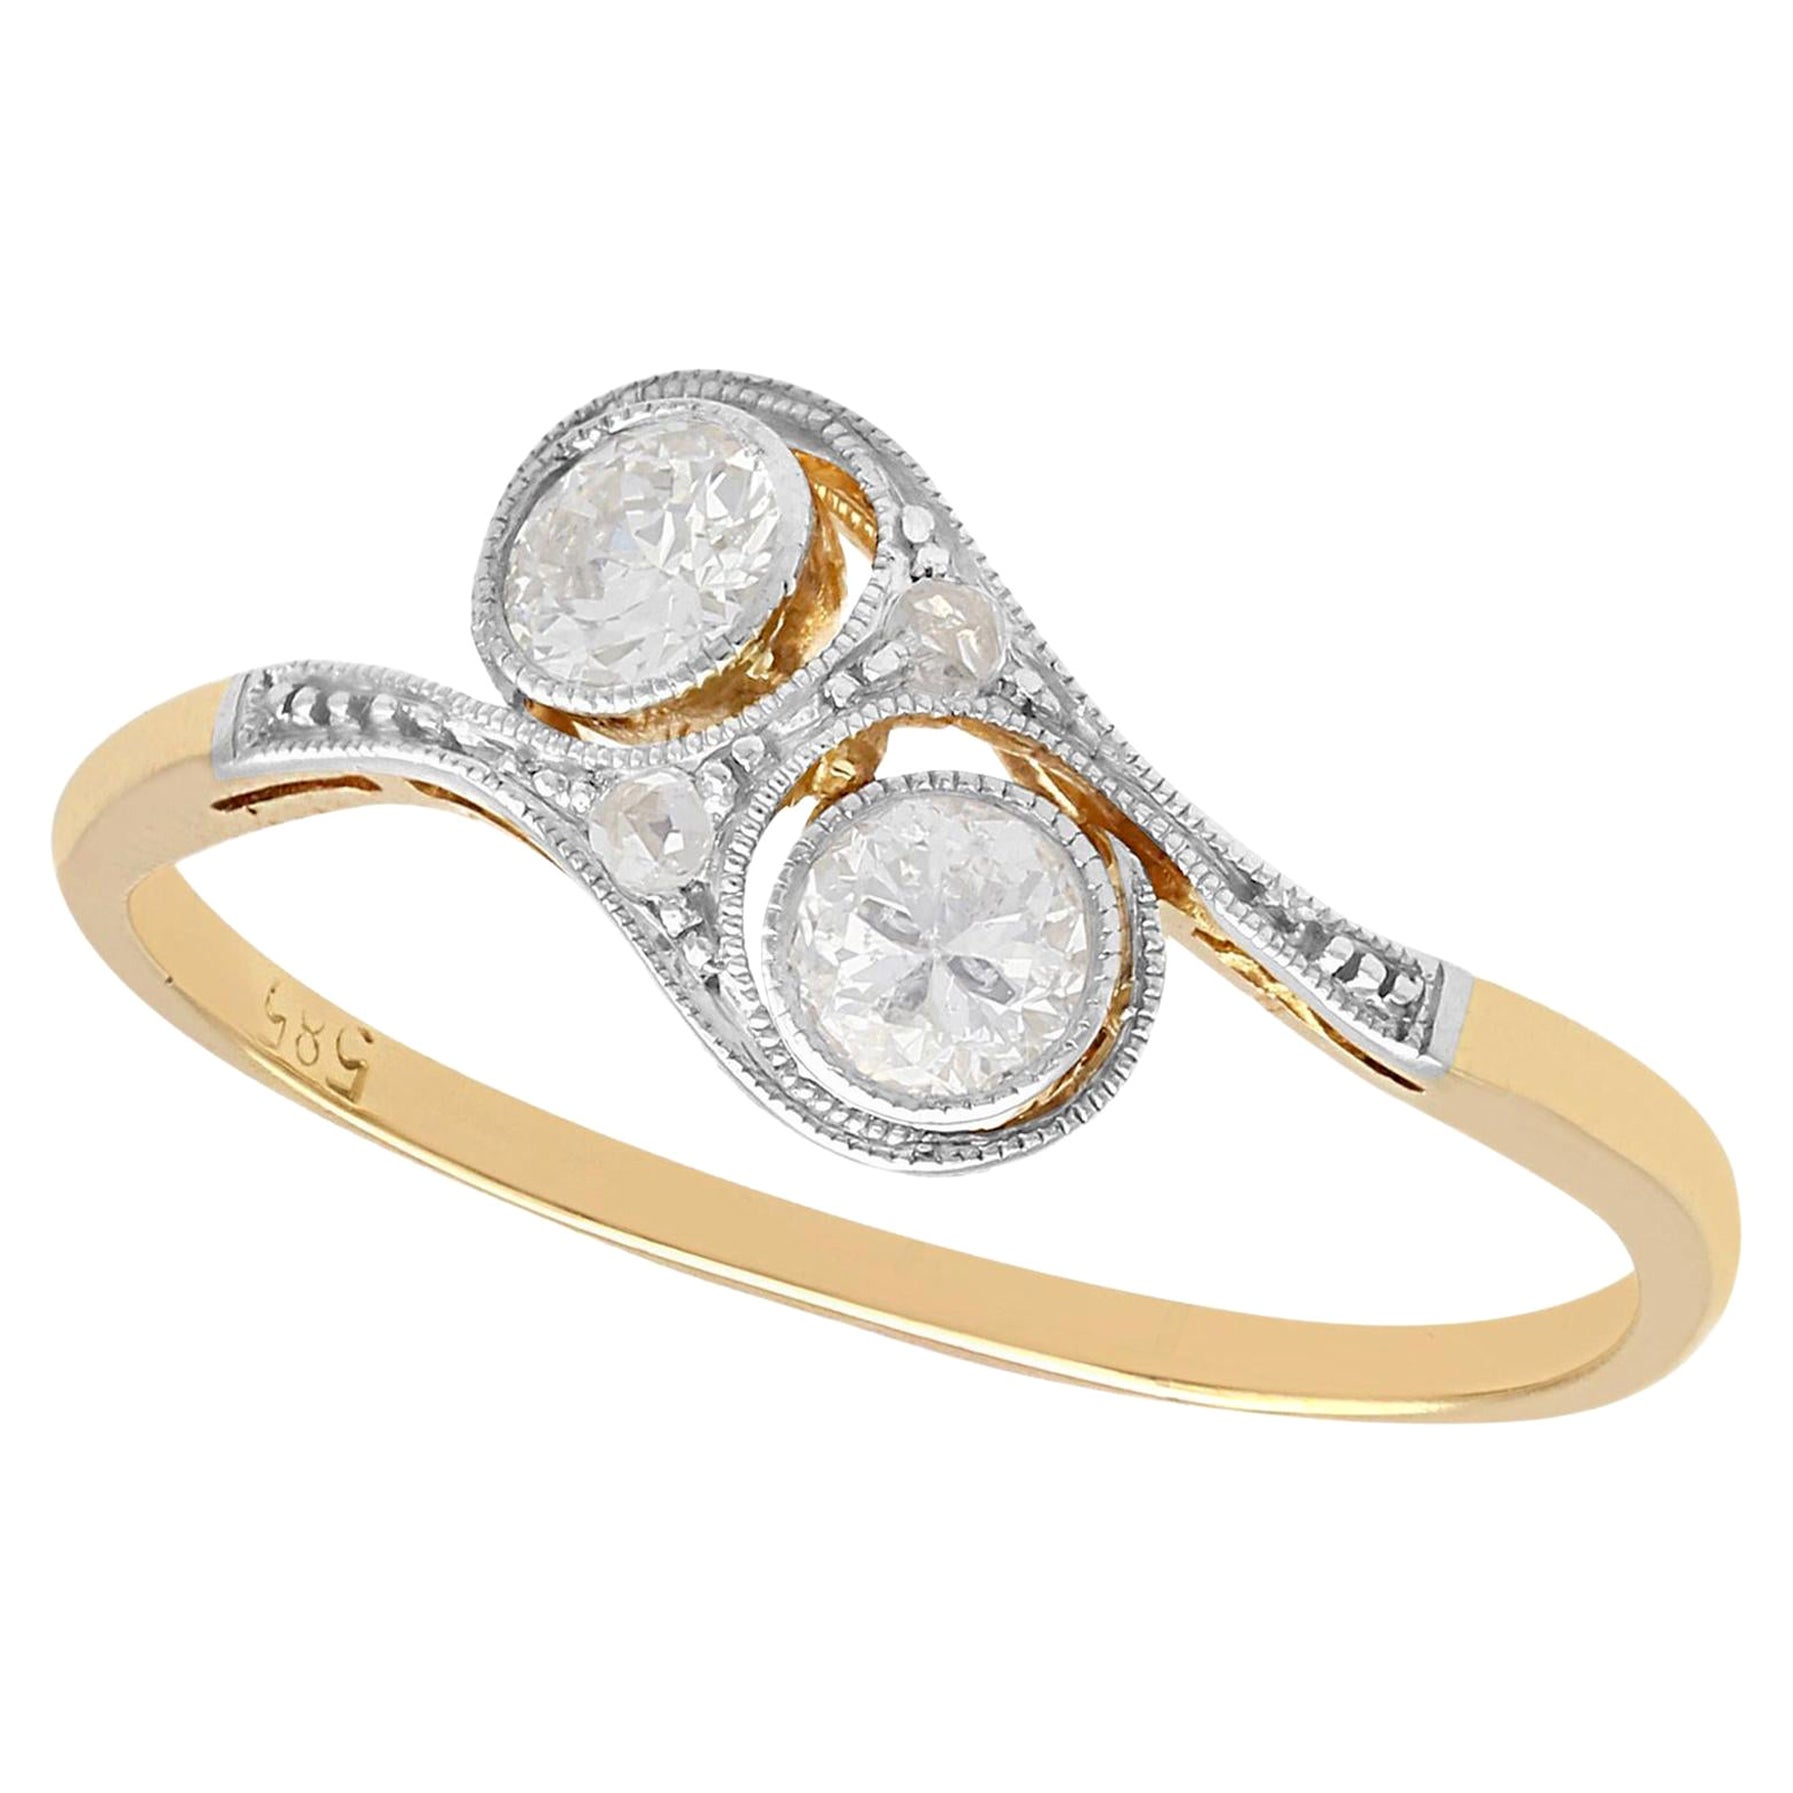 1920s Diamond and Yellow Gold Twist Ring